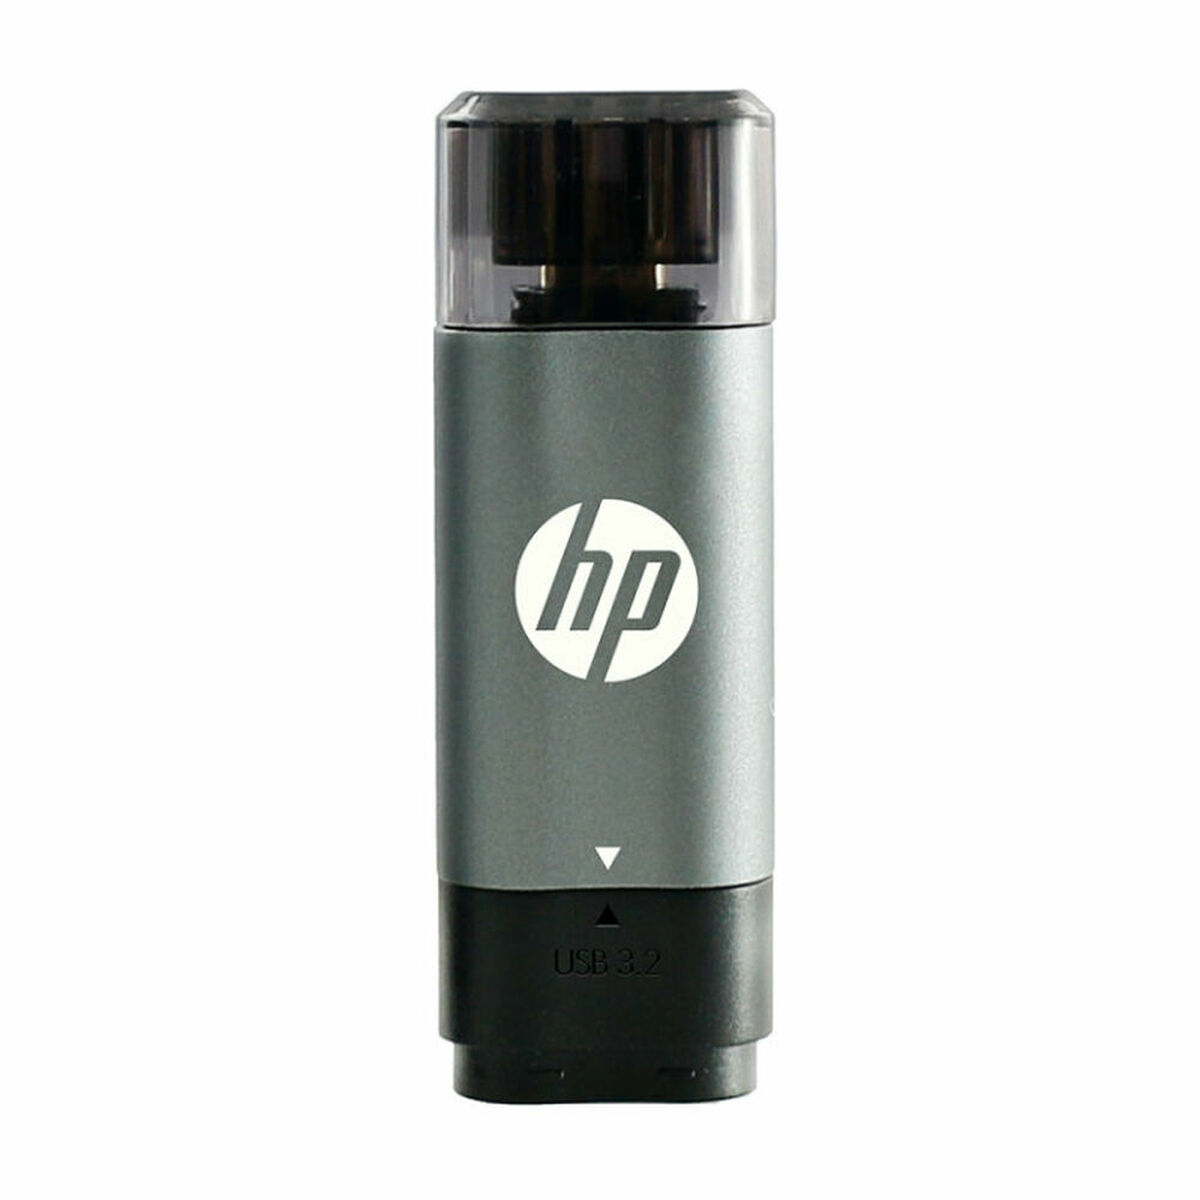 Clé USB PNY HPFD5600C 128GB